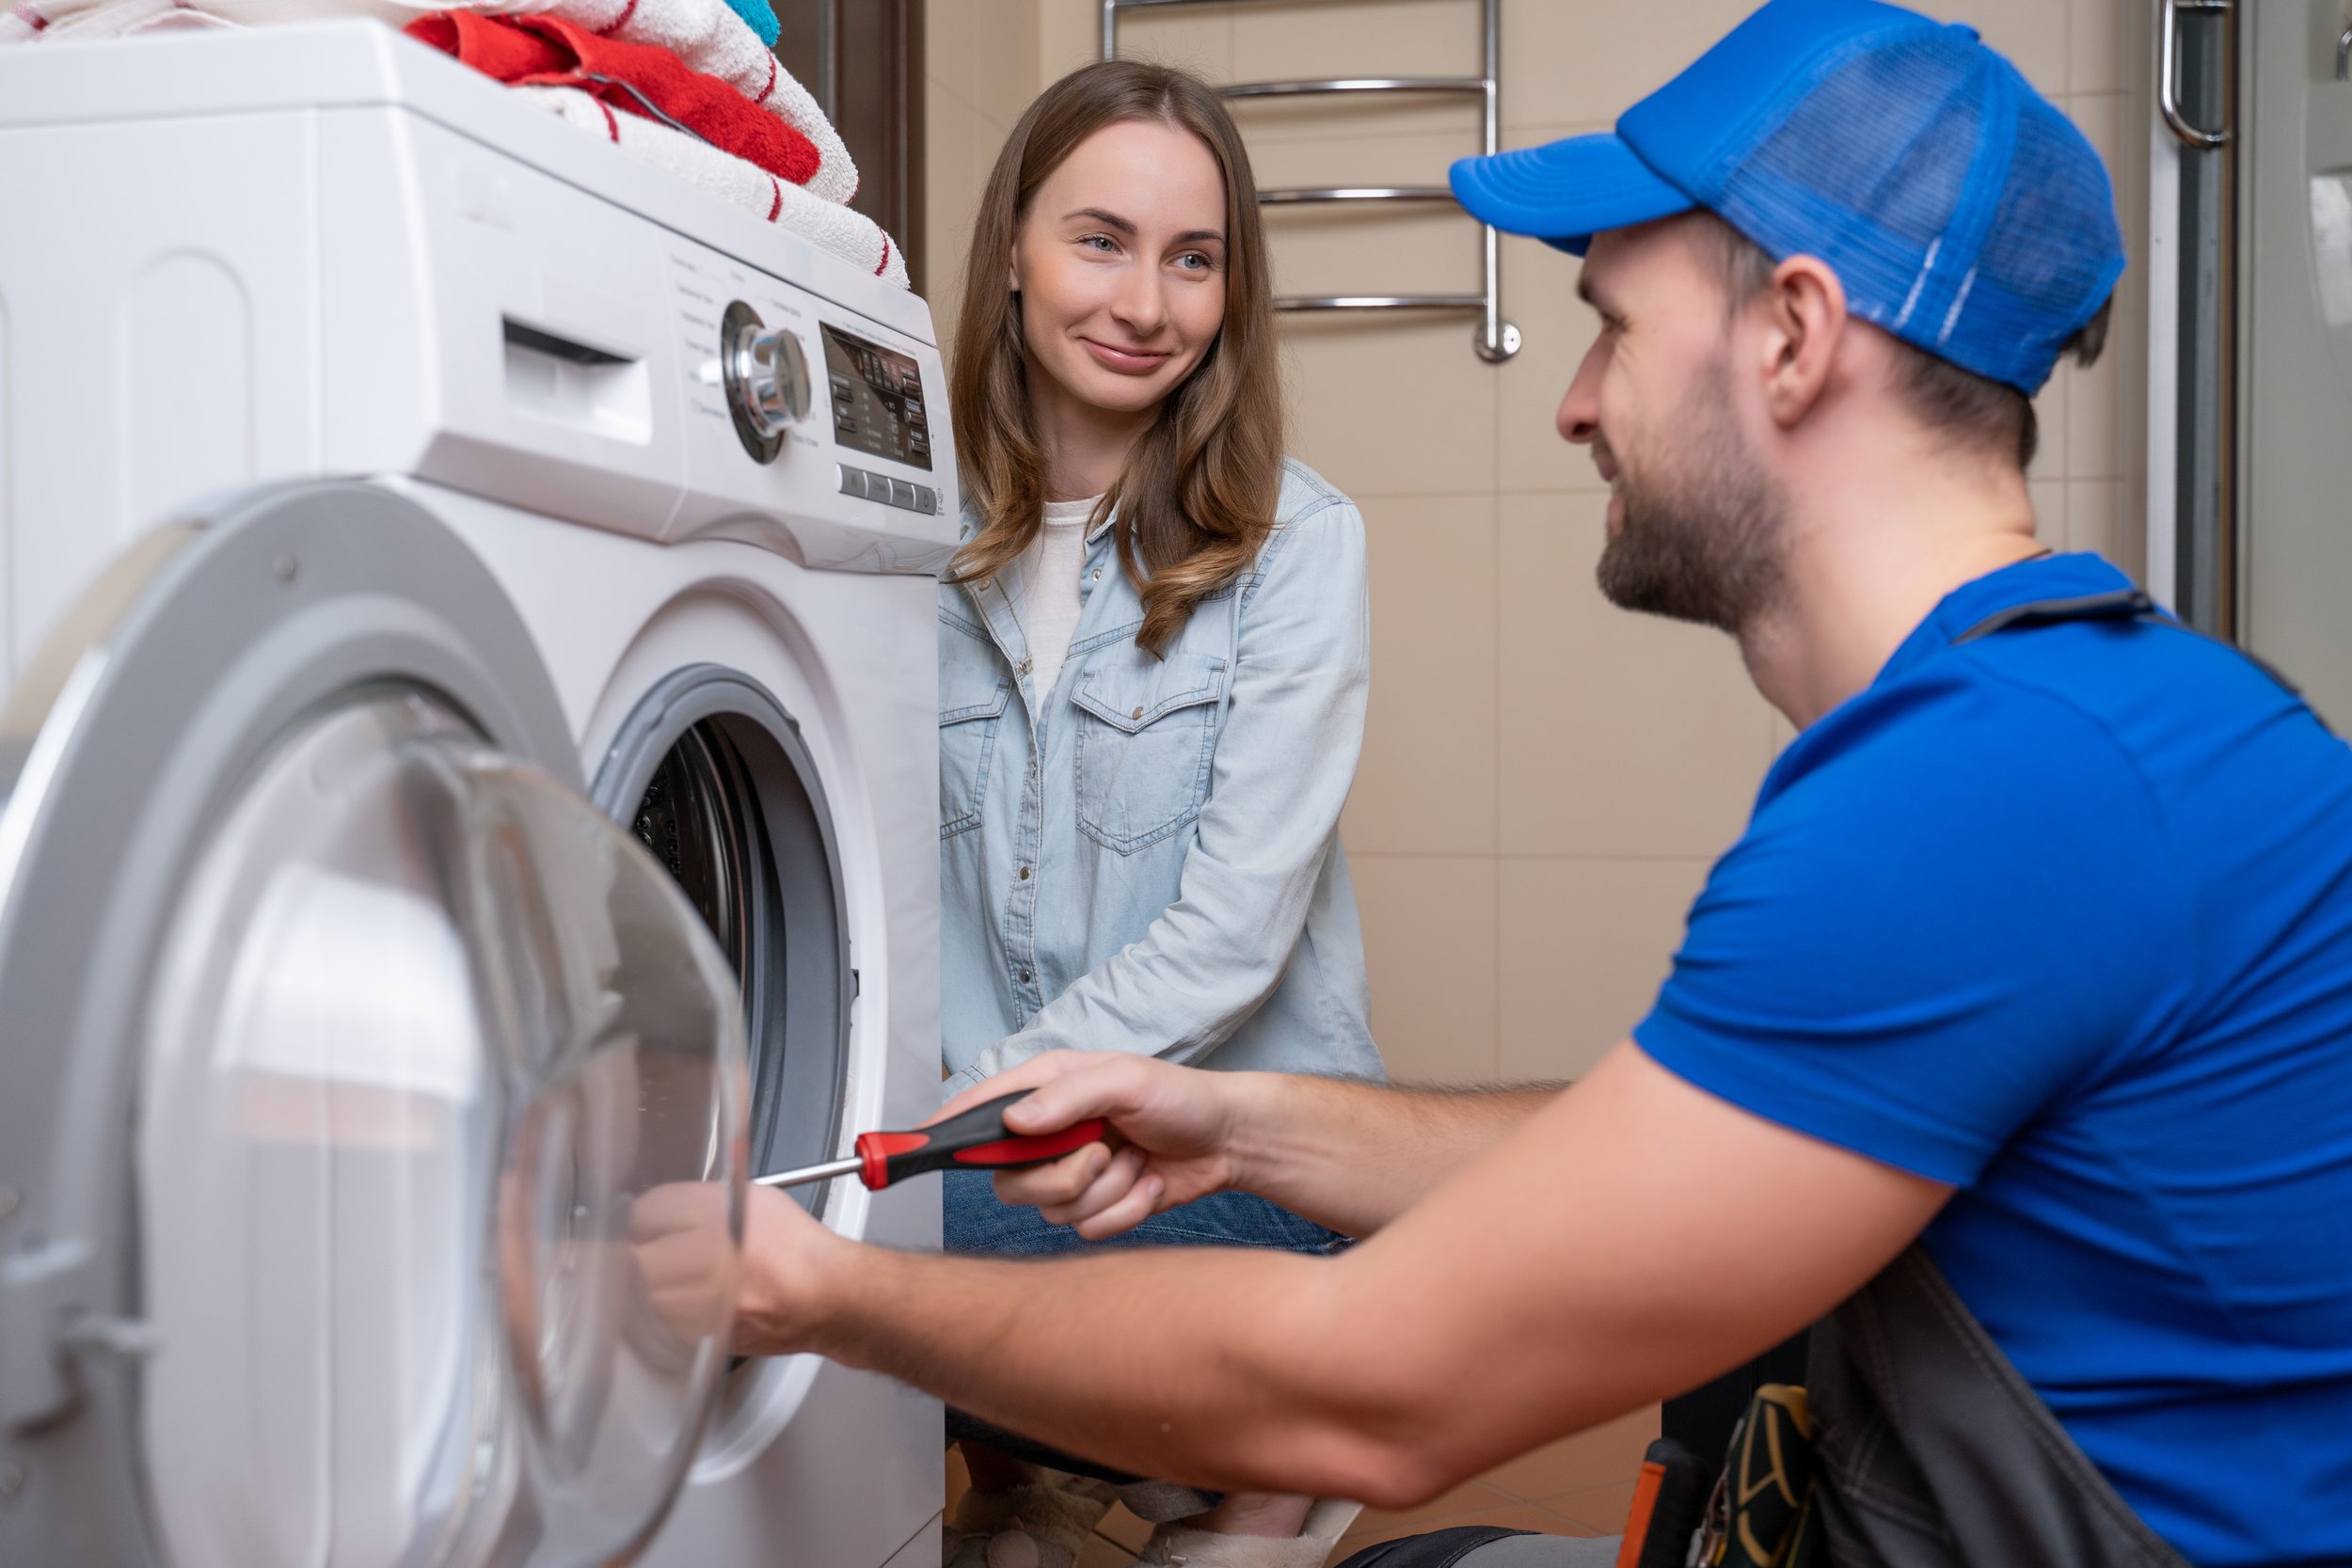 repairman-repairs-washing-machine-front-woman-man-communicates-with-owner-washing-machine.jpg